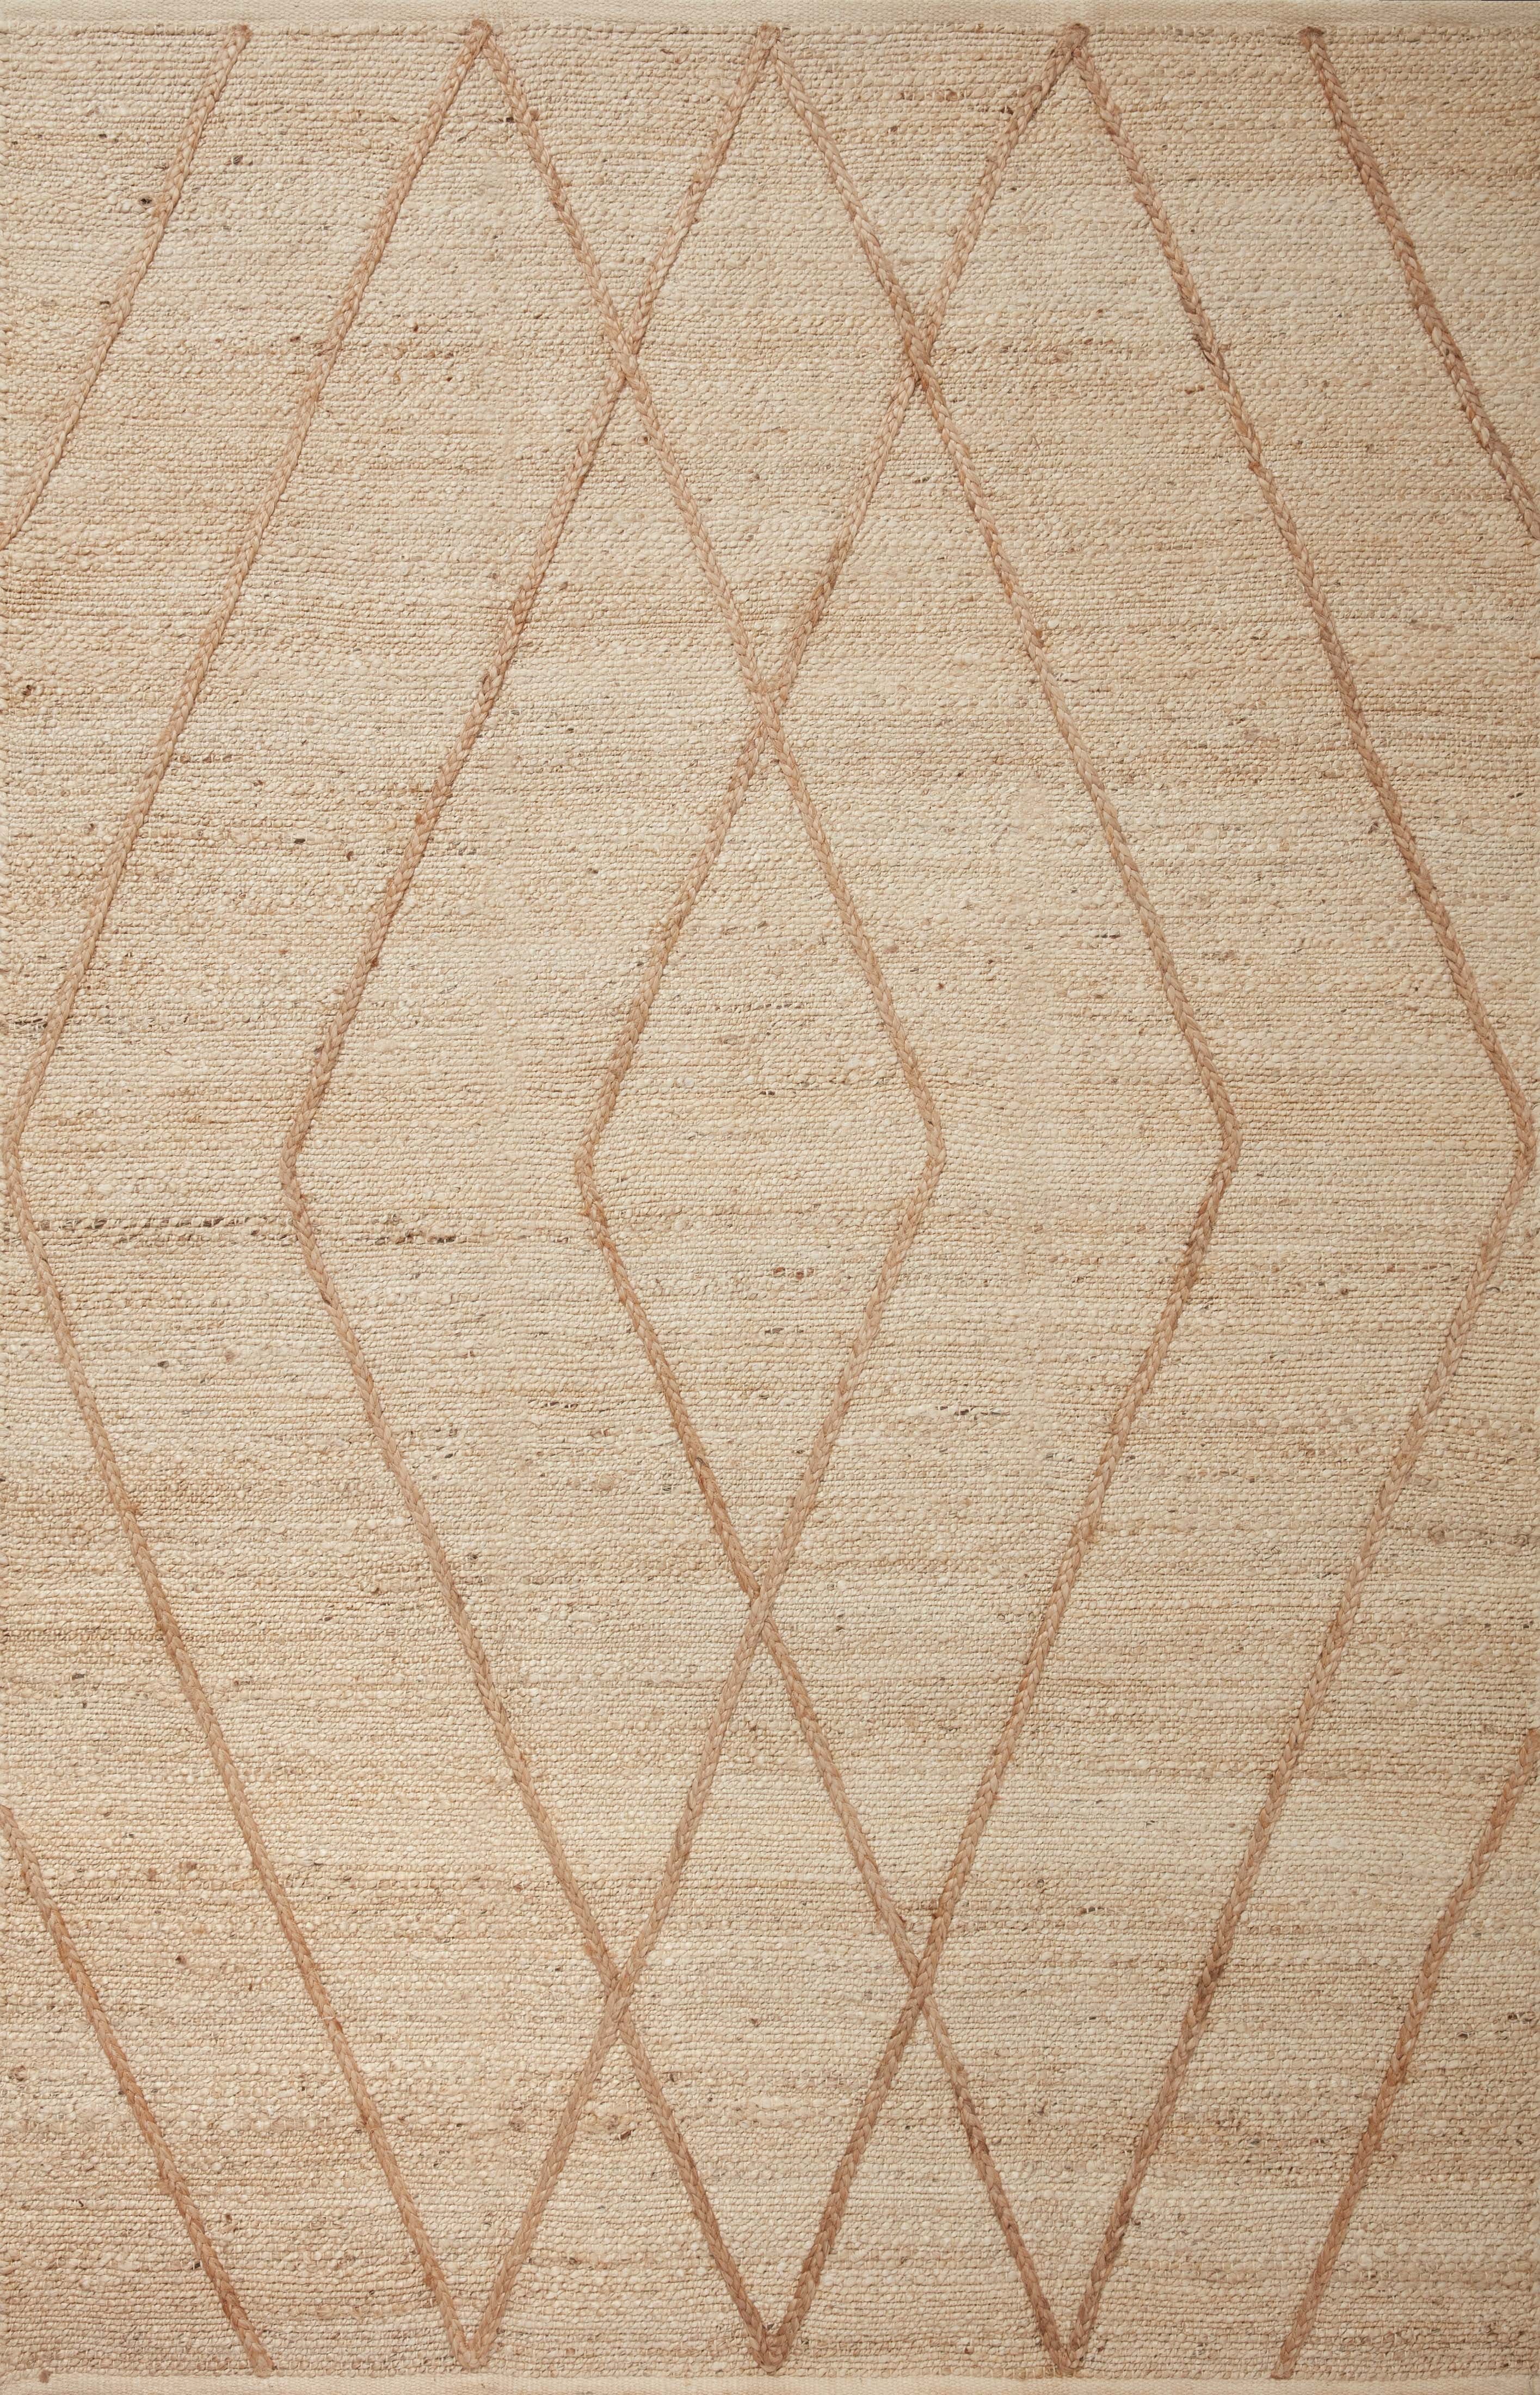 Bodhi Ivory Natural Hand-Woven Jute Geometric Area Rug 3'-6" x 5'-6"